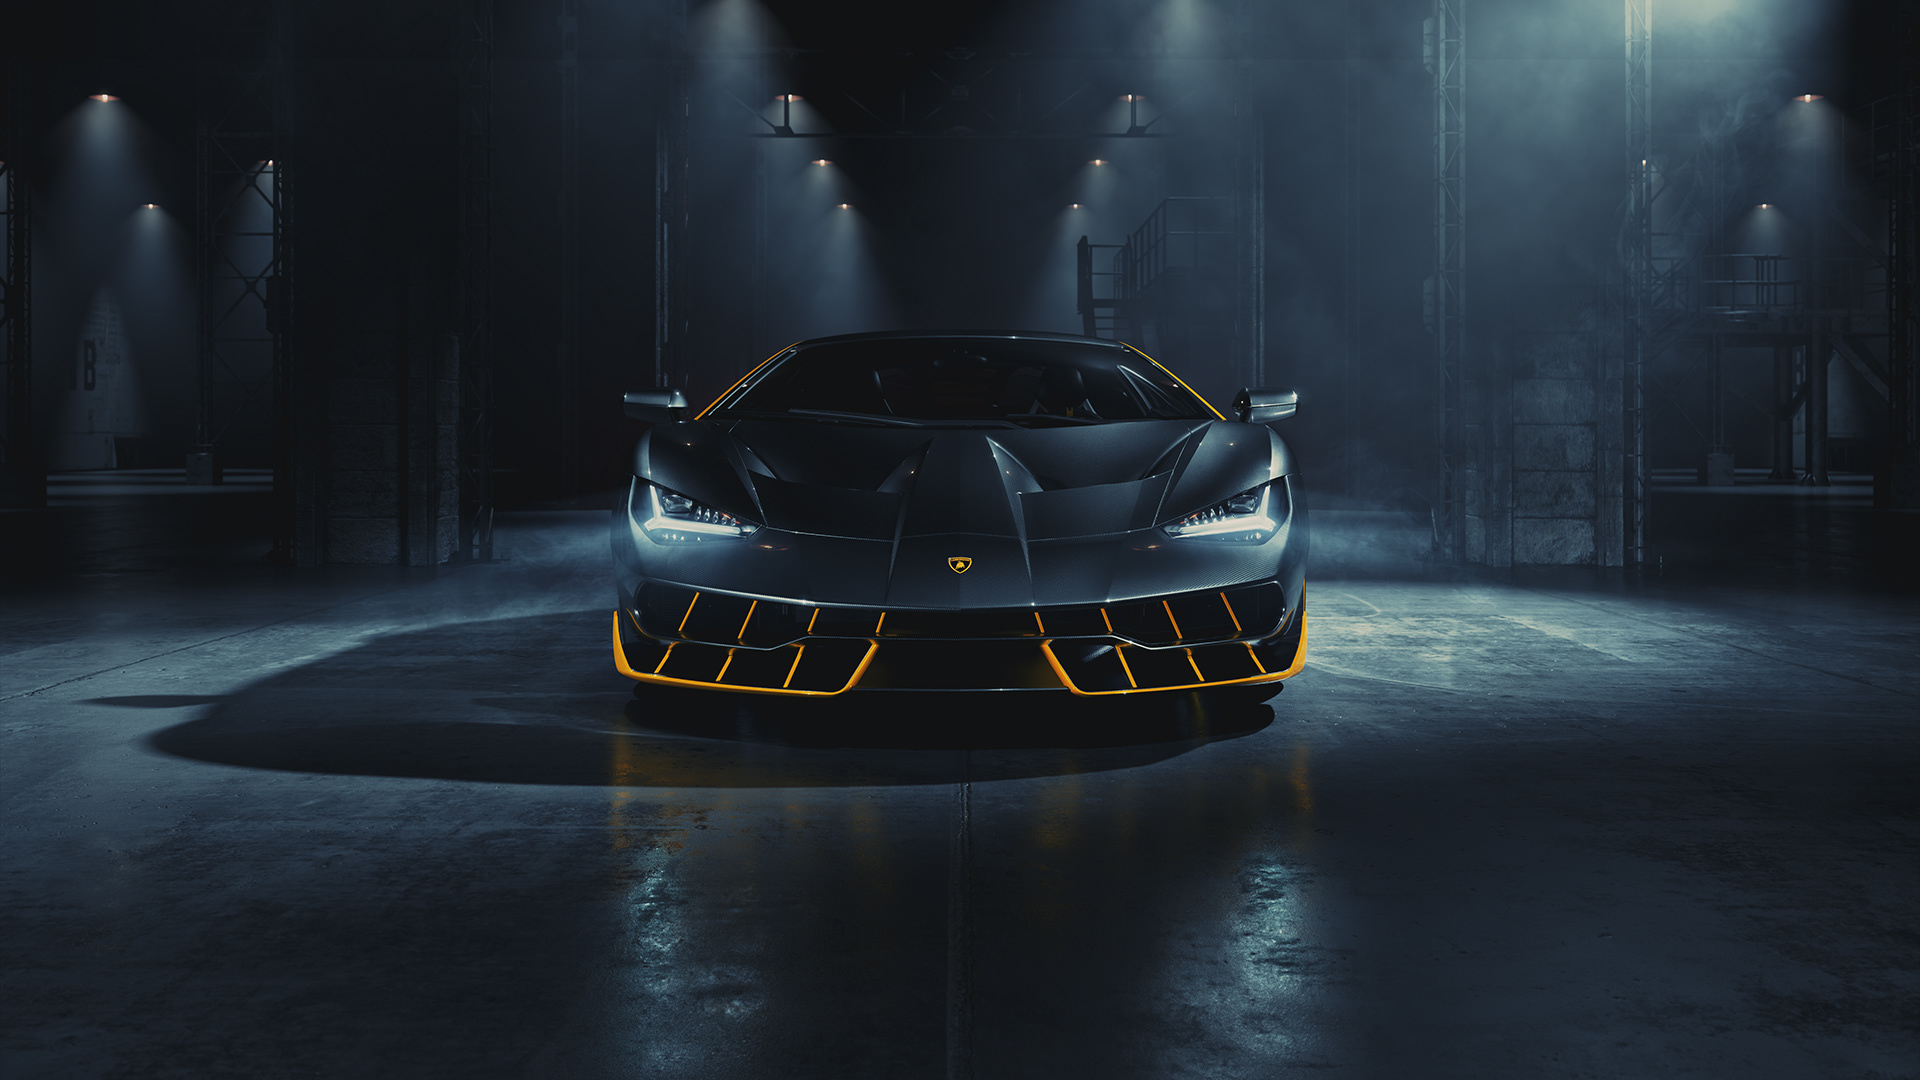 Lamborghini Centenario \u2013 Full CGI on Behance81199191477621.5e32d3fdb8c9e.jpg